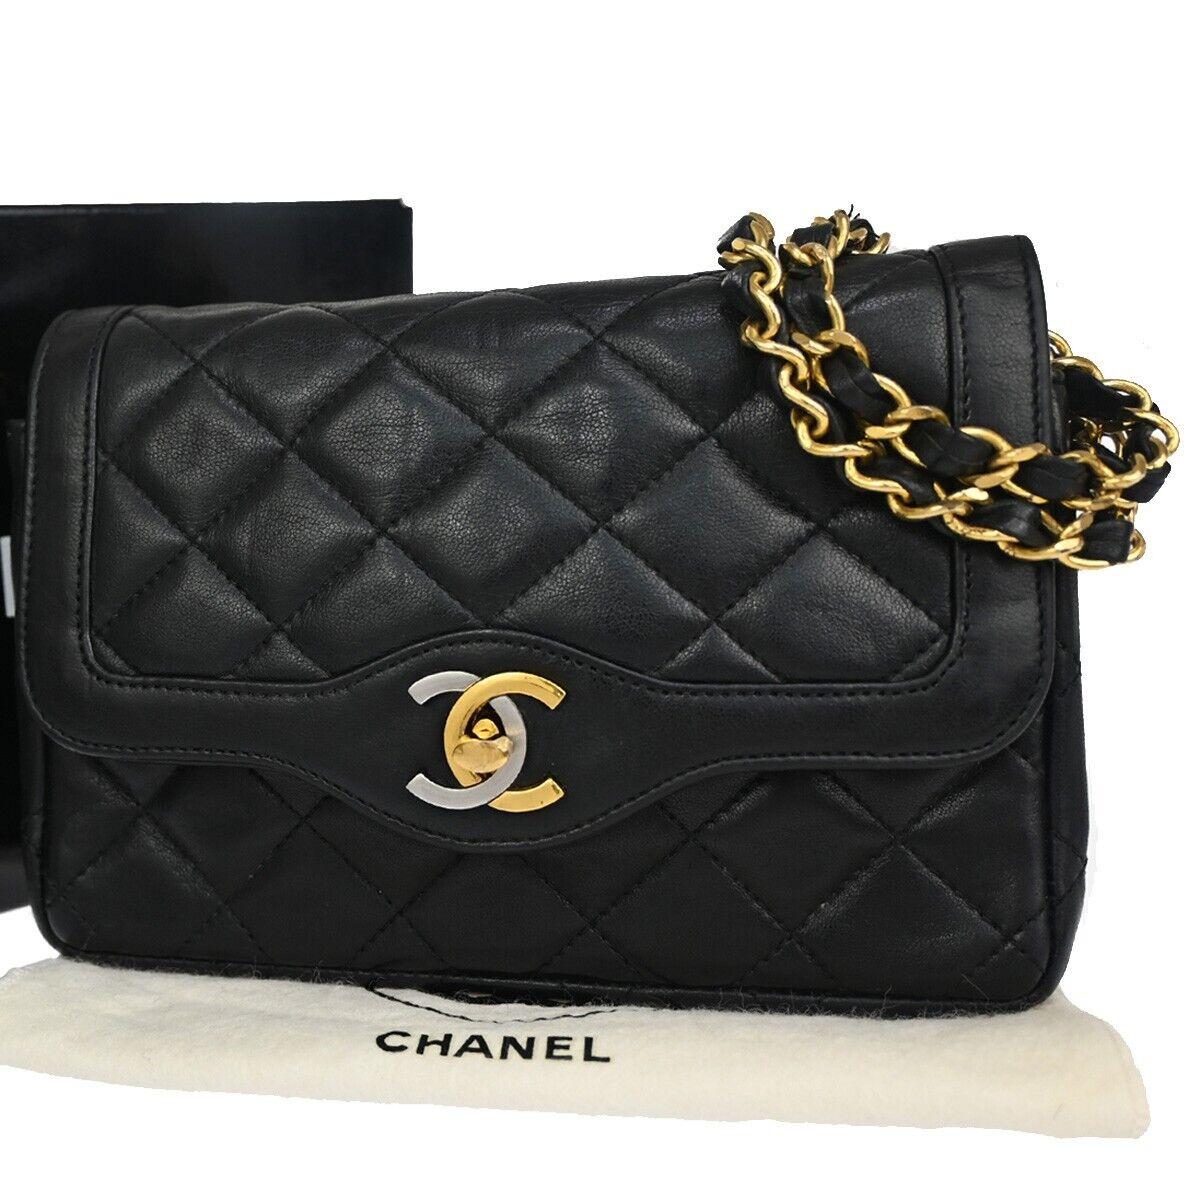 Chanel Diana Leather Shoulder Bag (pre-owned) in Black